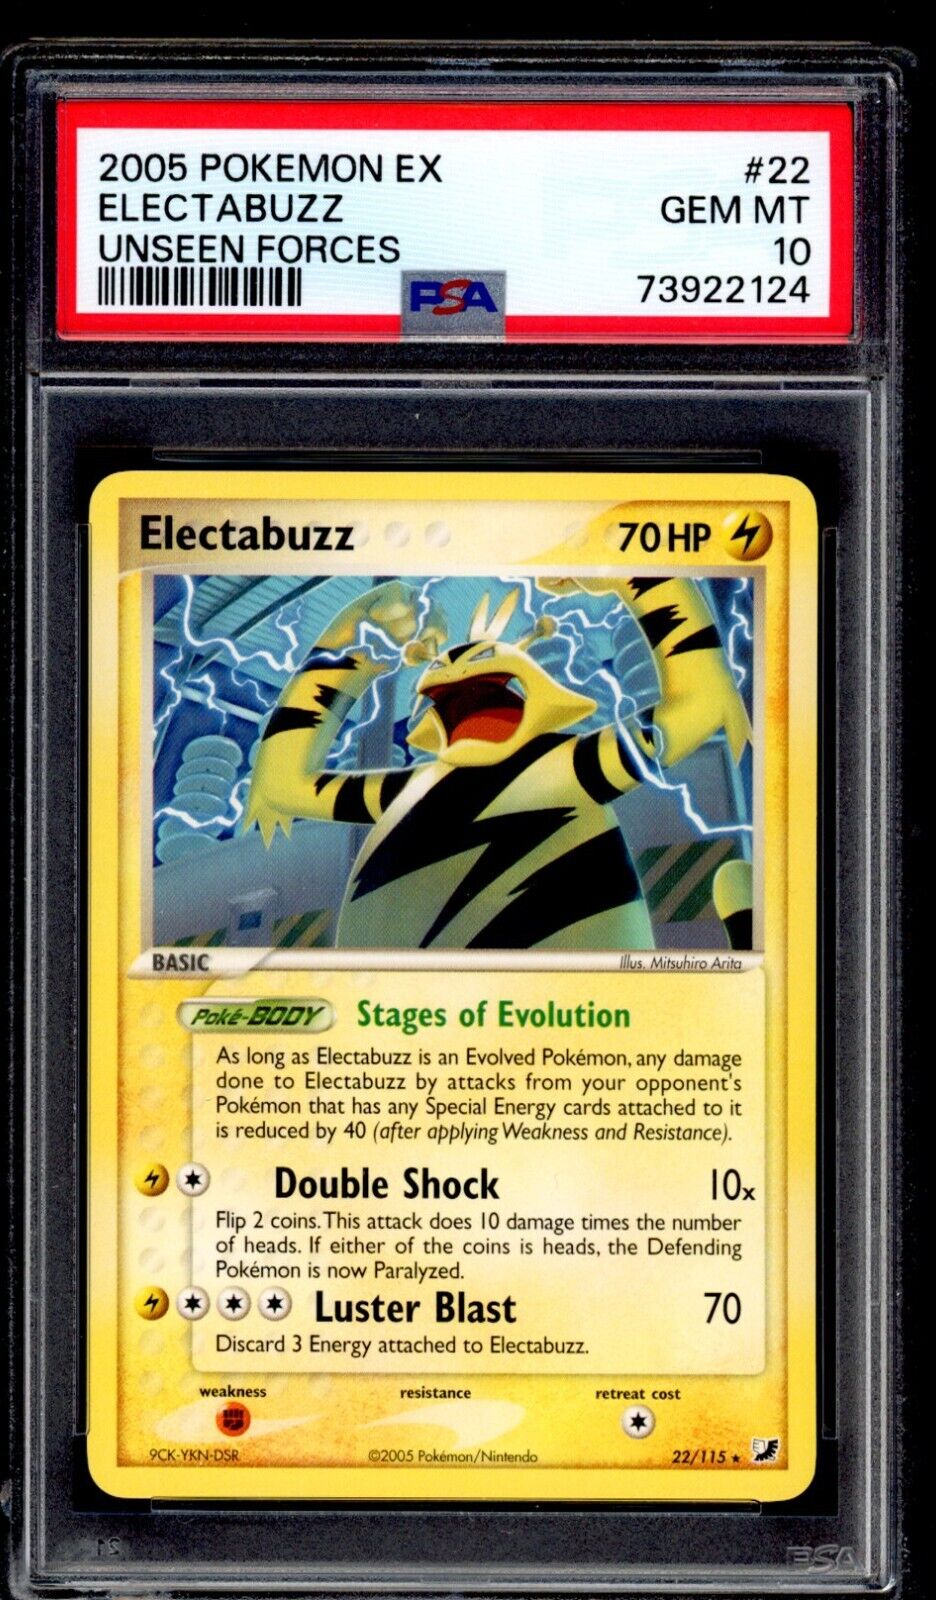 PSA 10 Electabuzz 2005 Pokemon Card 22/115 EX Unseen Forces